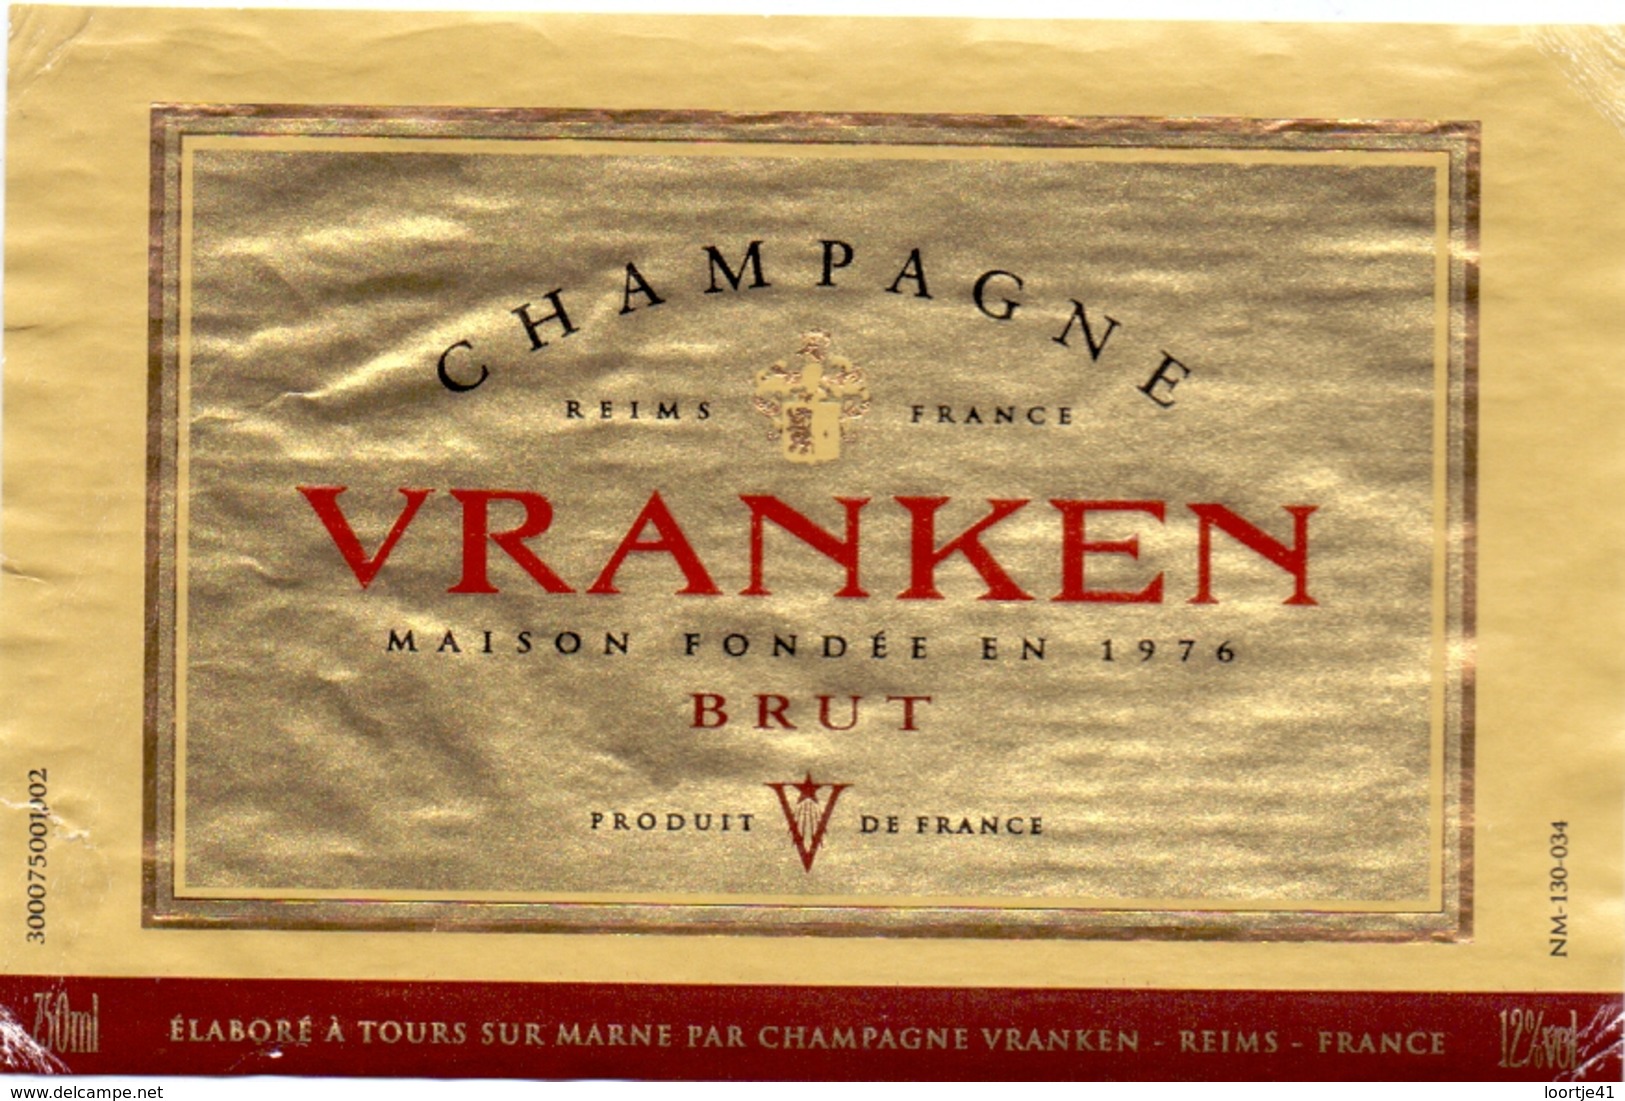 Vranken Champagne etiketten oud